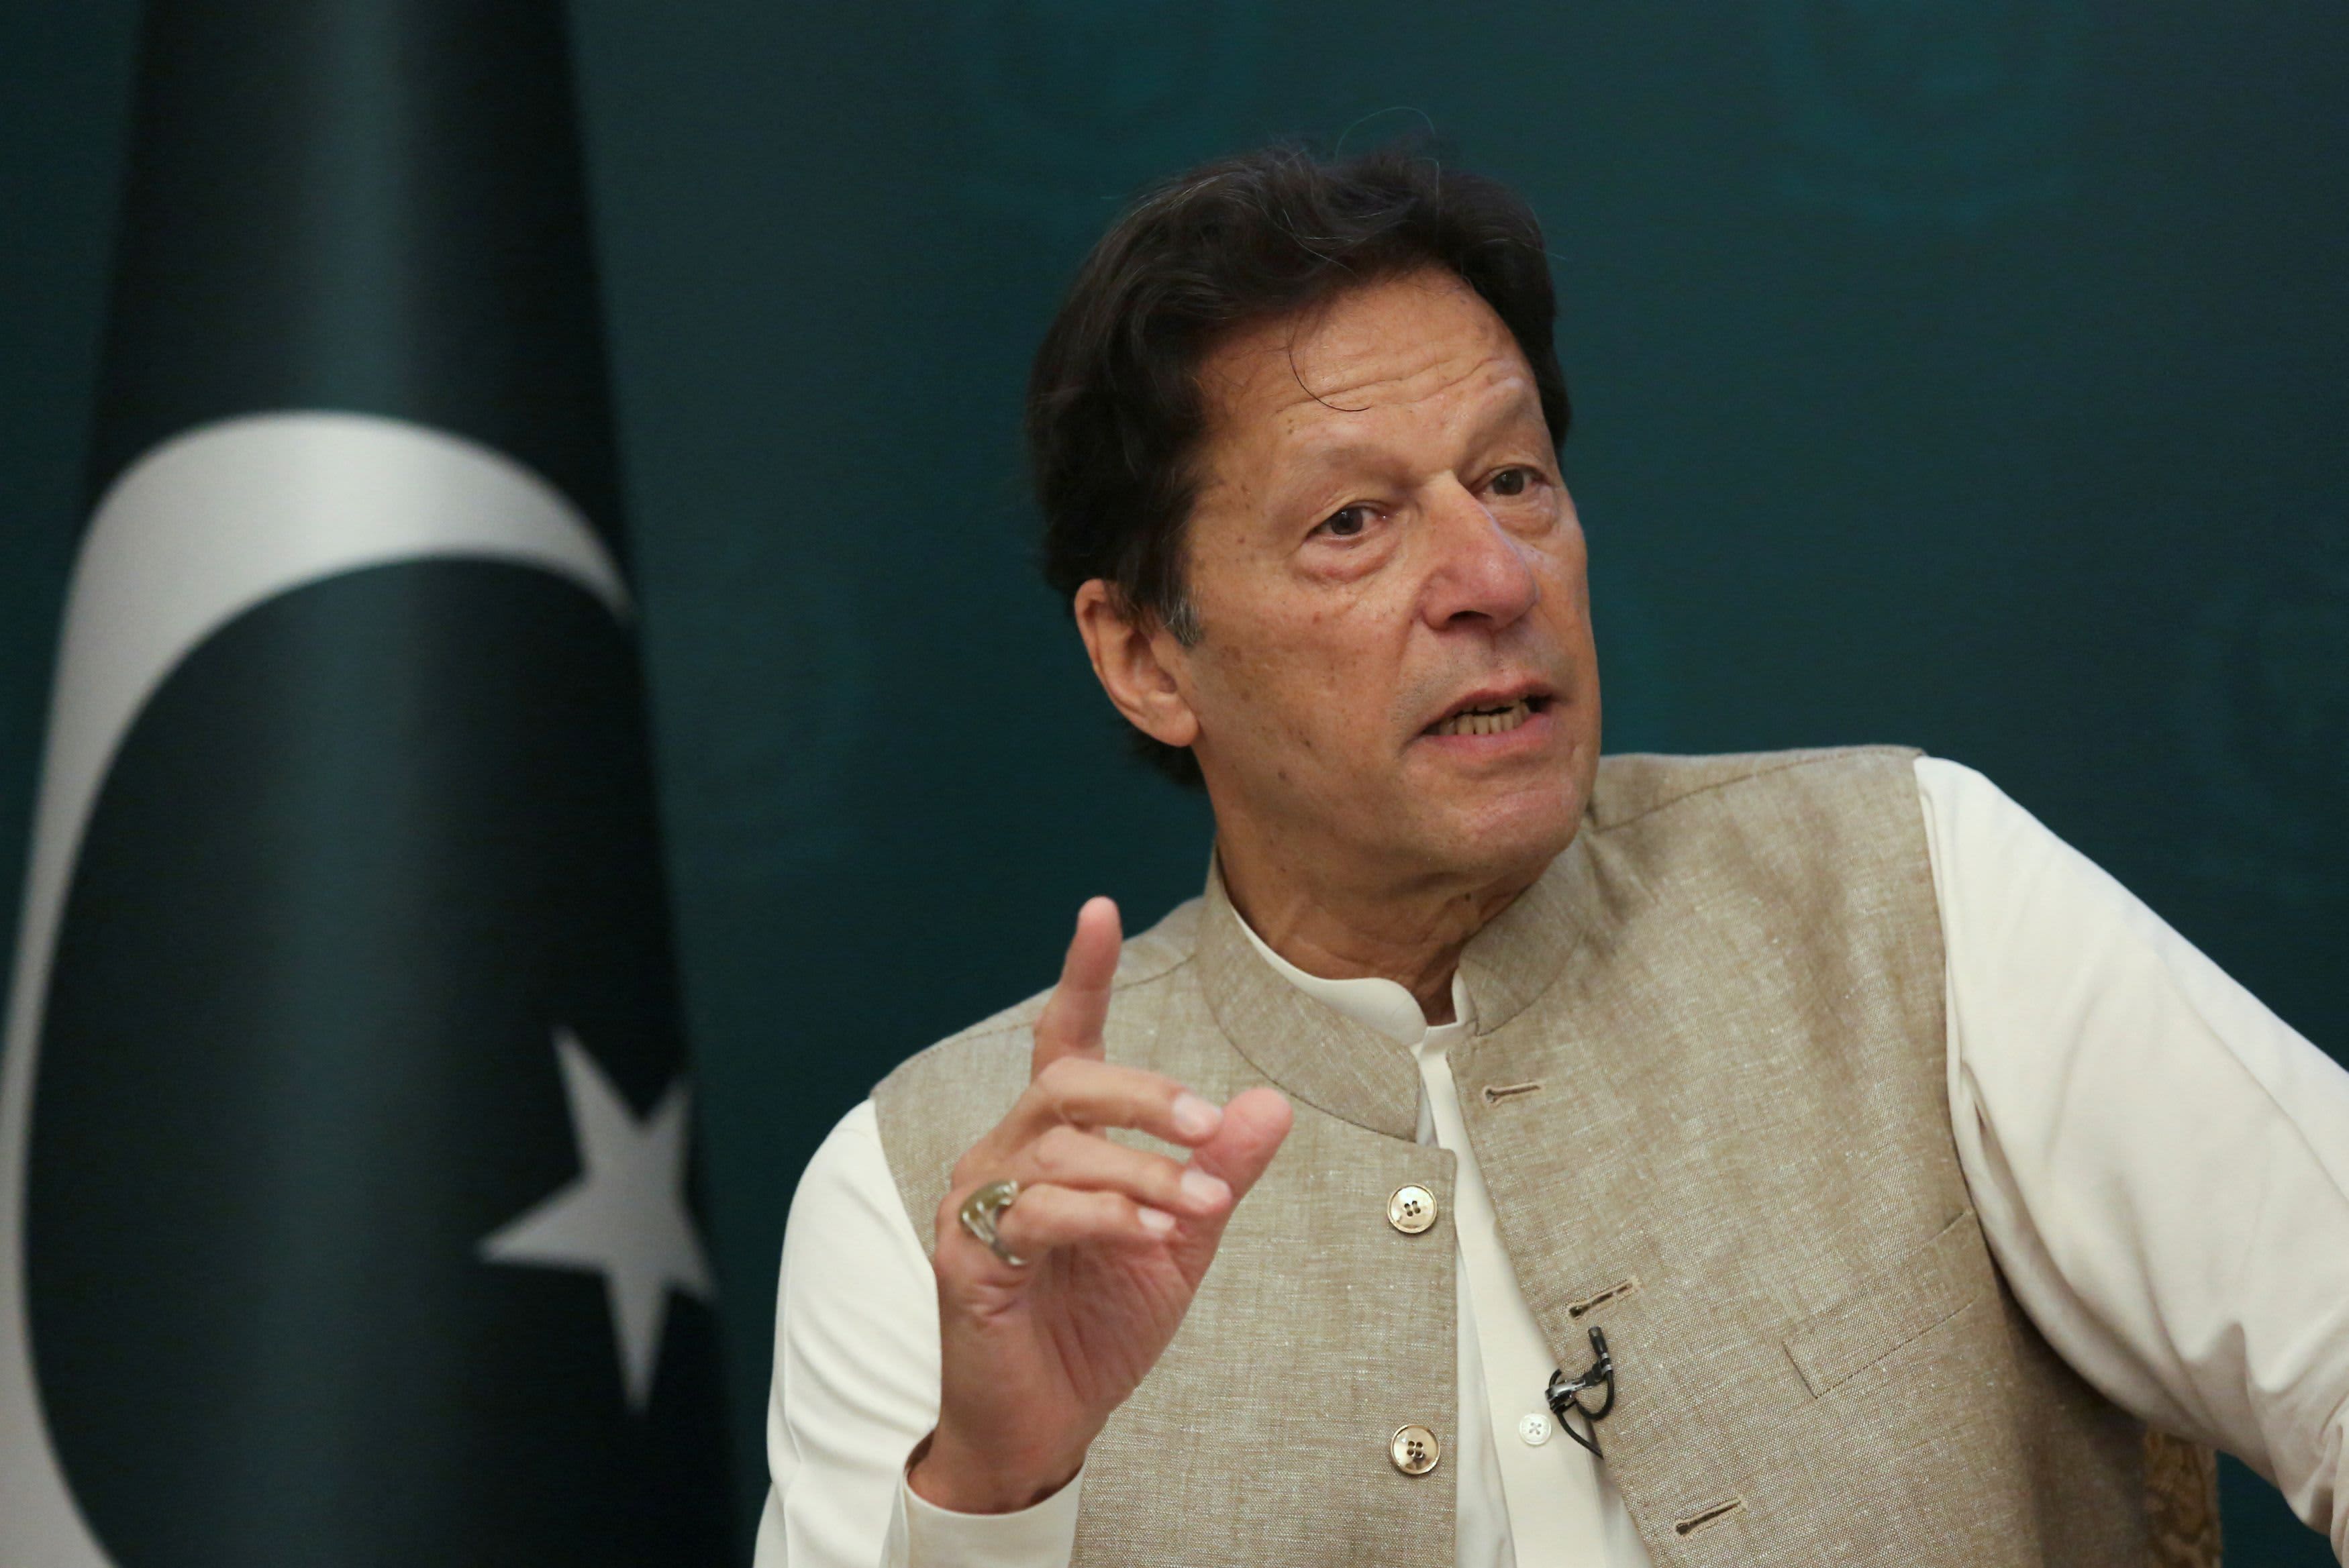 The arrest of former Pakistani Prime Minister Imran Khan